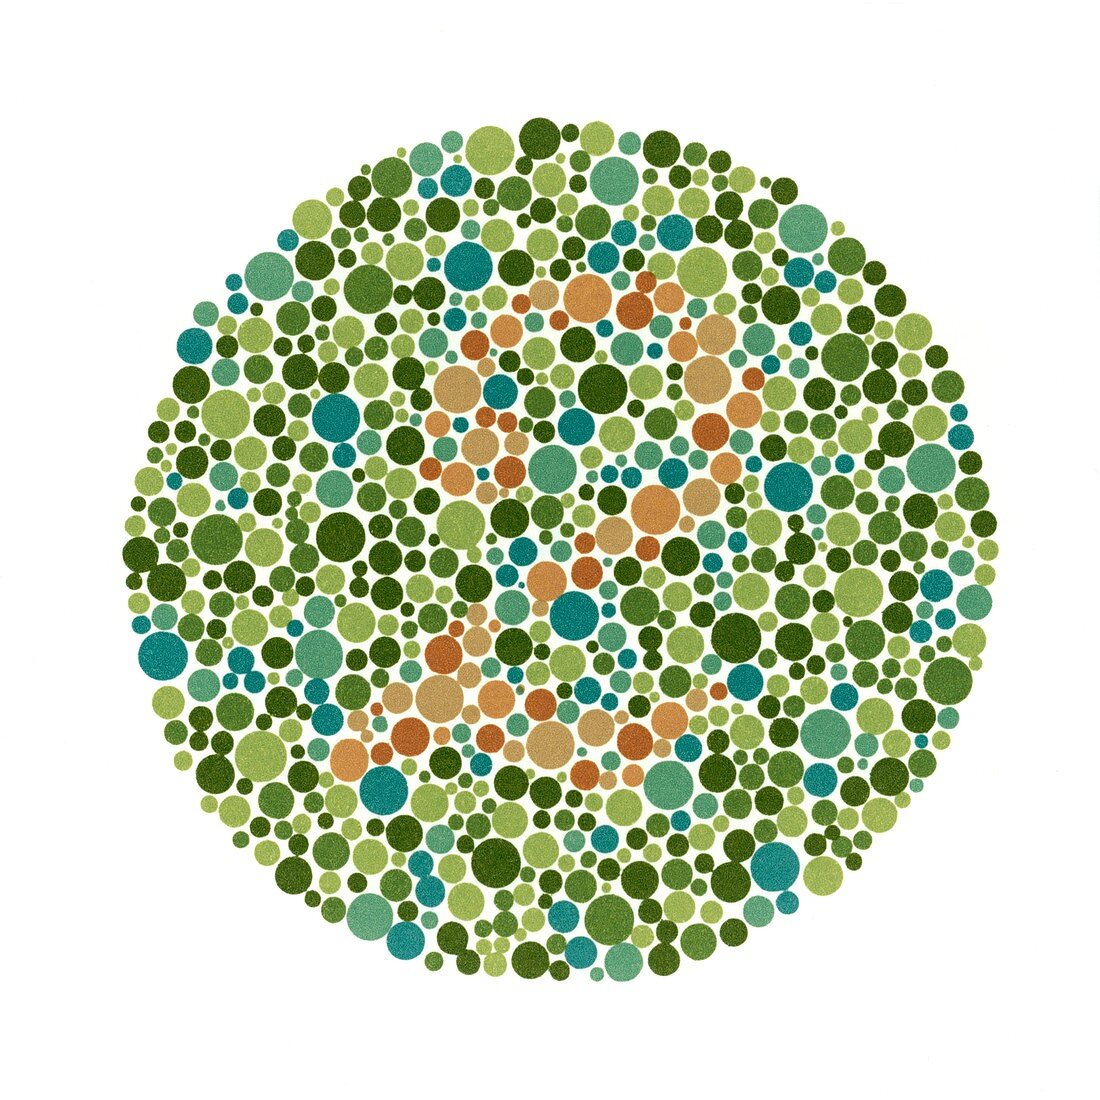 Colour blindness test